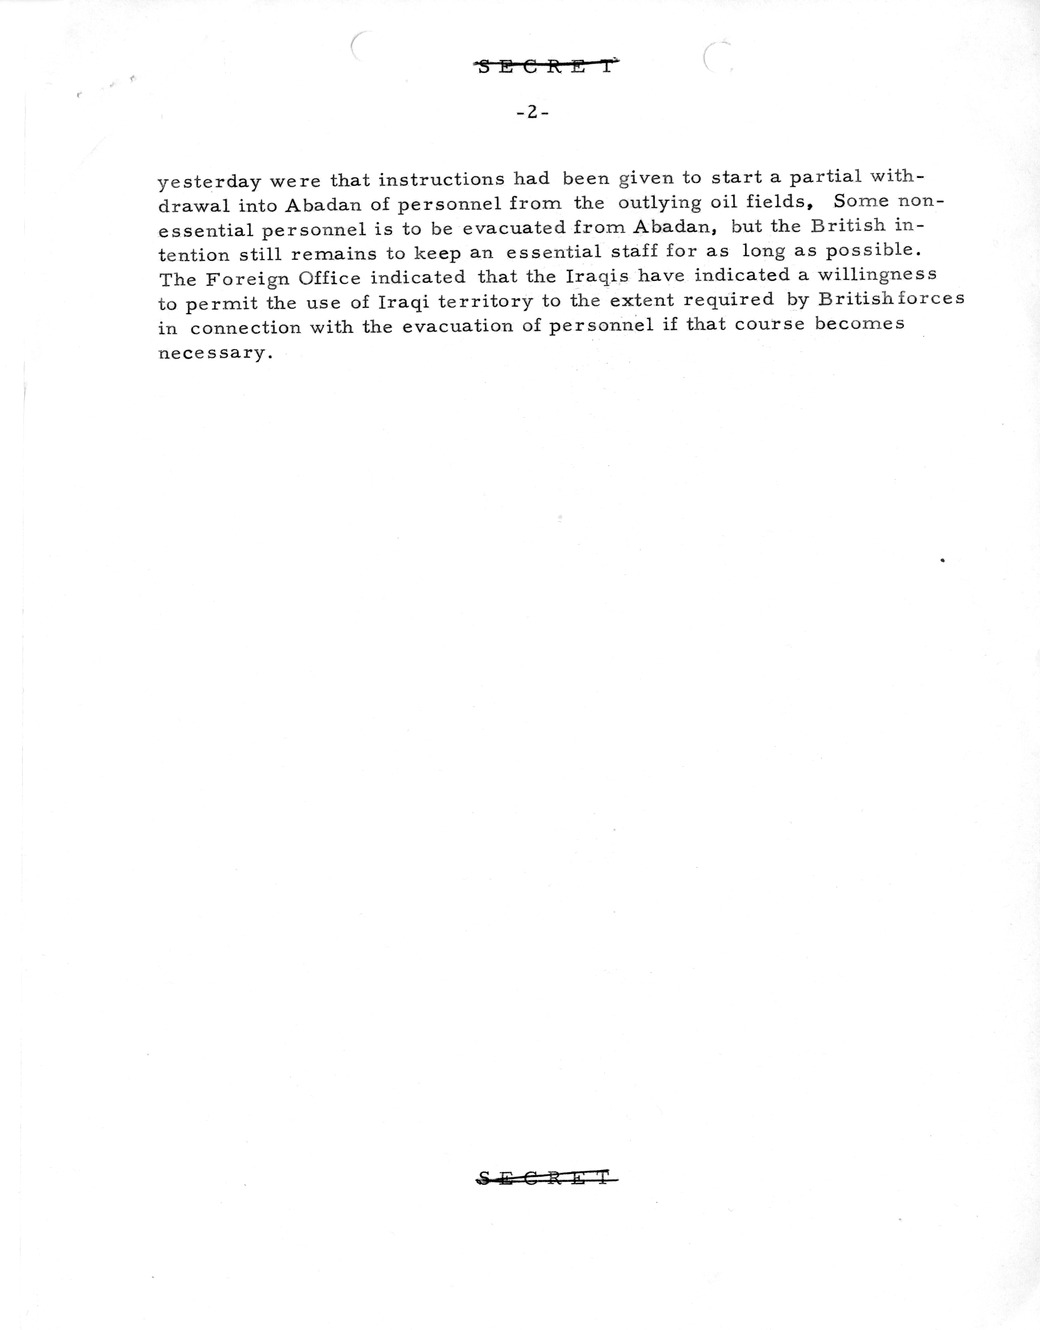 Memorandum, State Department Summary of Telegrams